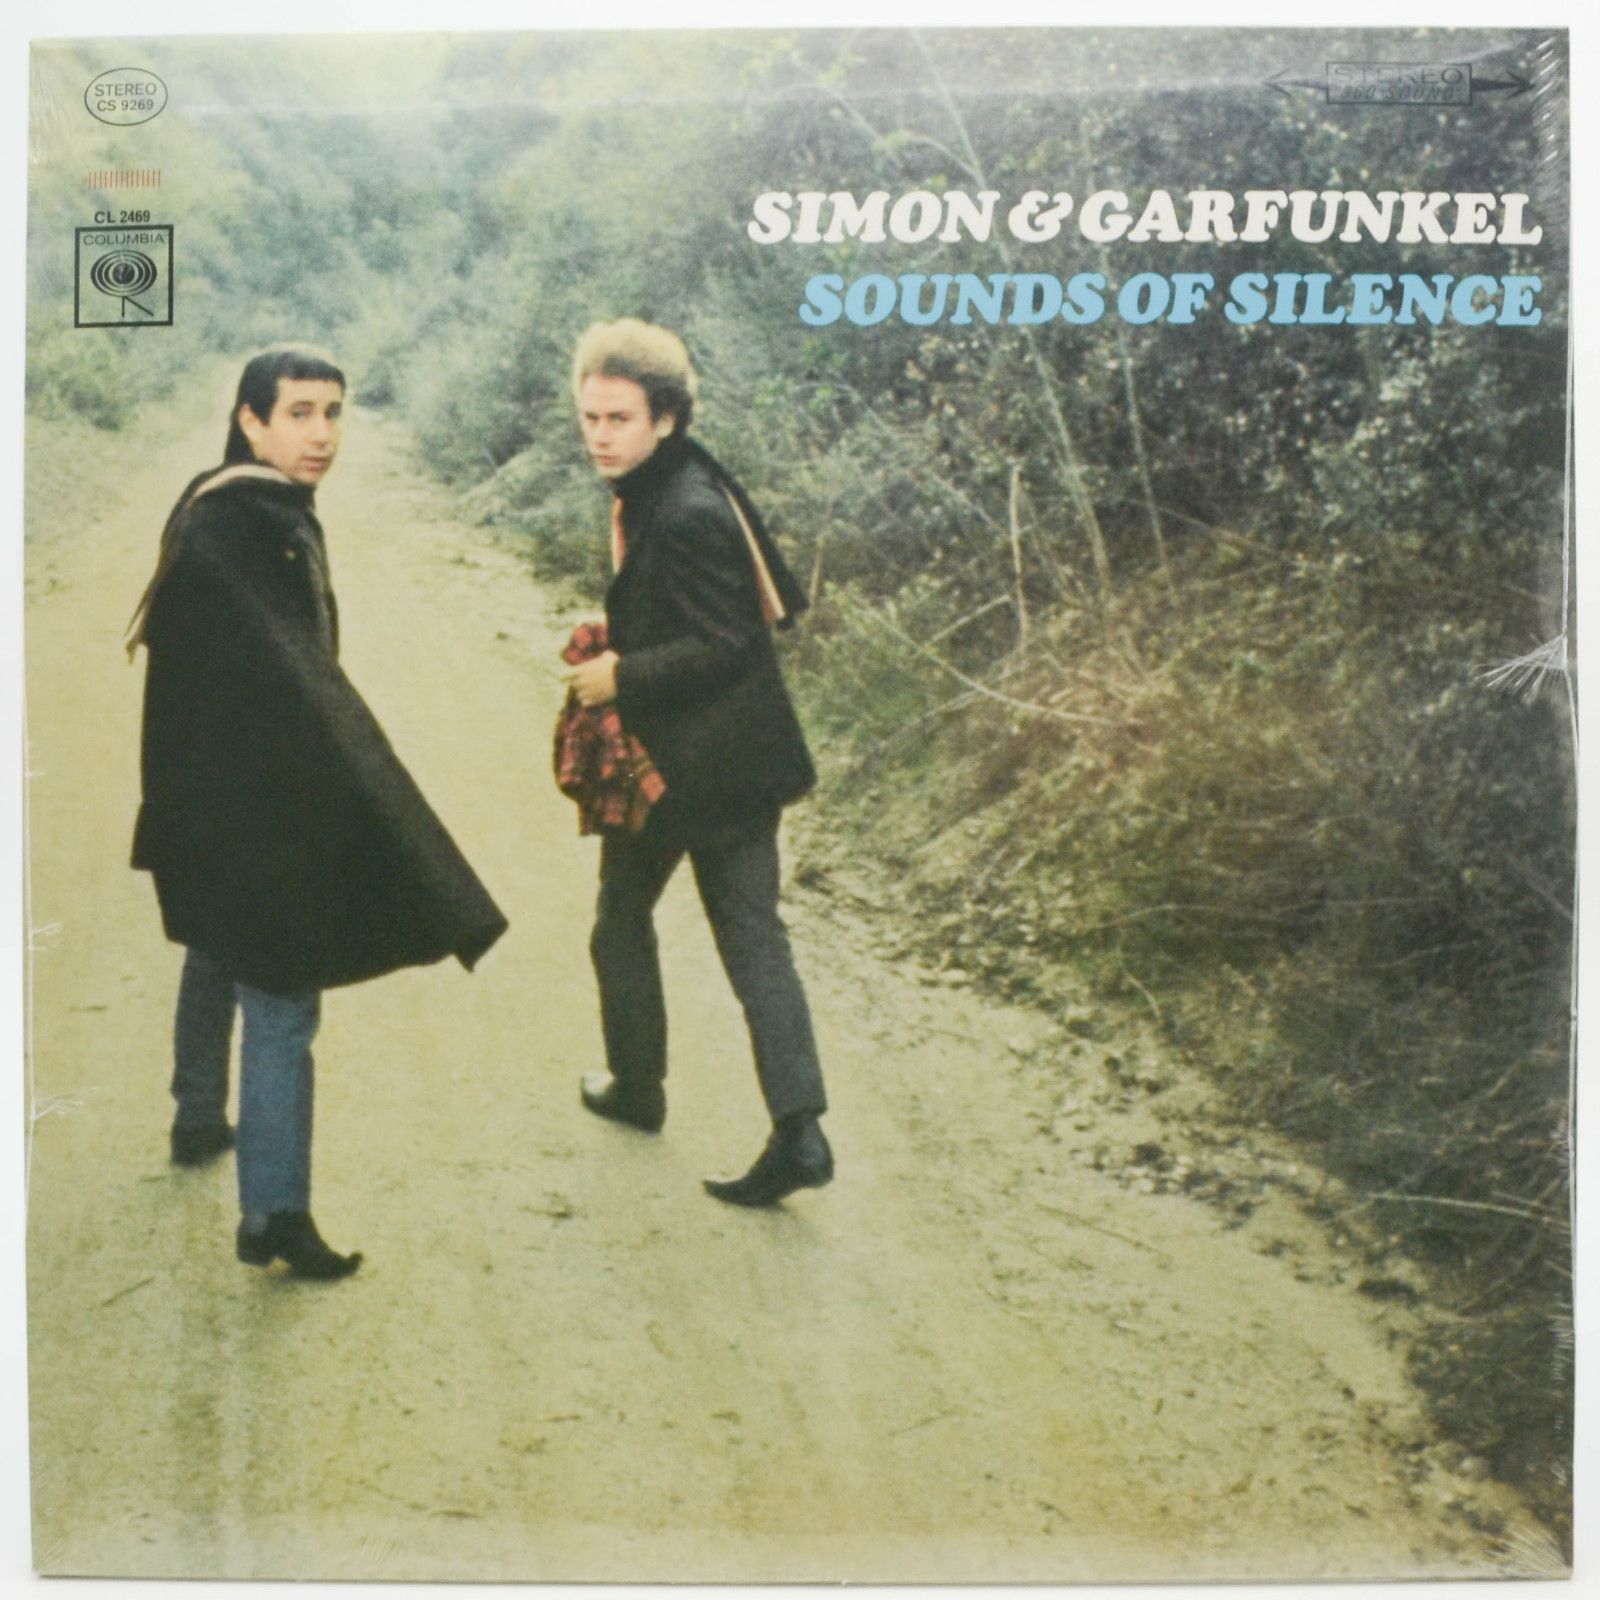 Simon & Garfunkel — Sounds Of Silence, 1966